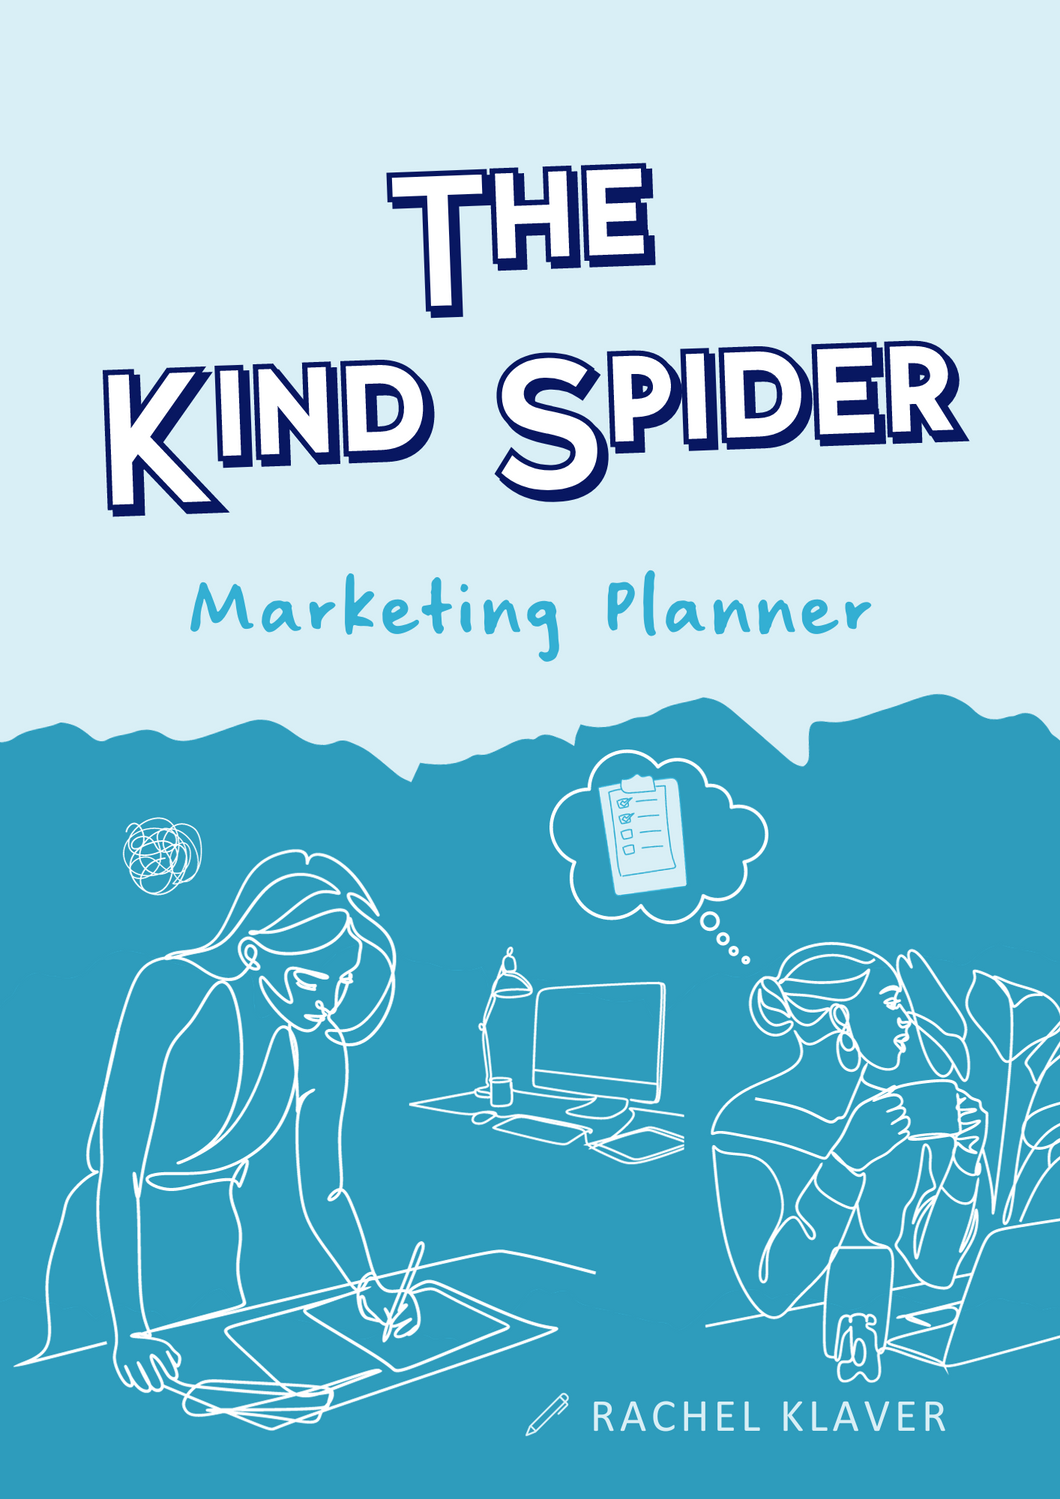 The Kind Spider Marketing Planner (Downloadable PDF)